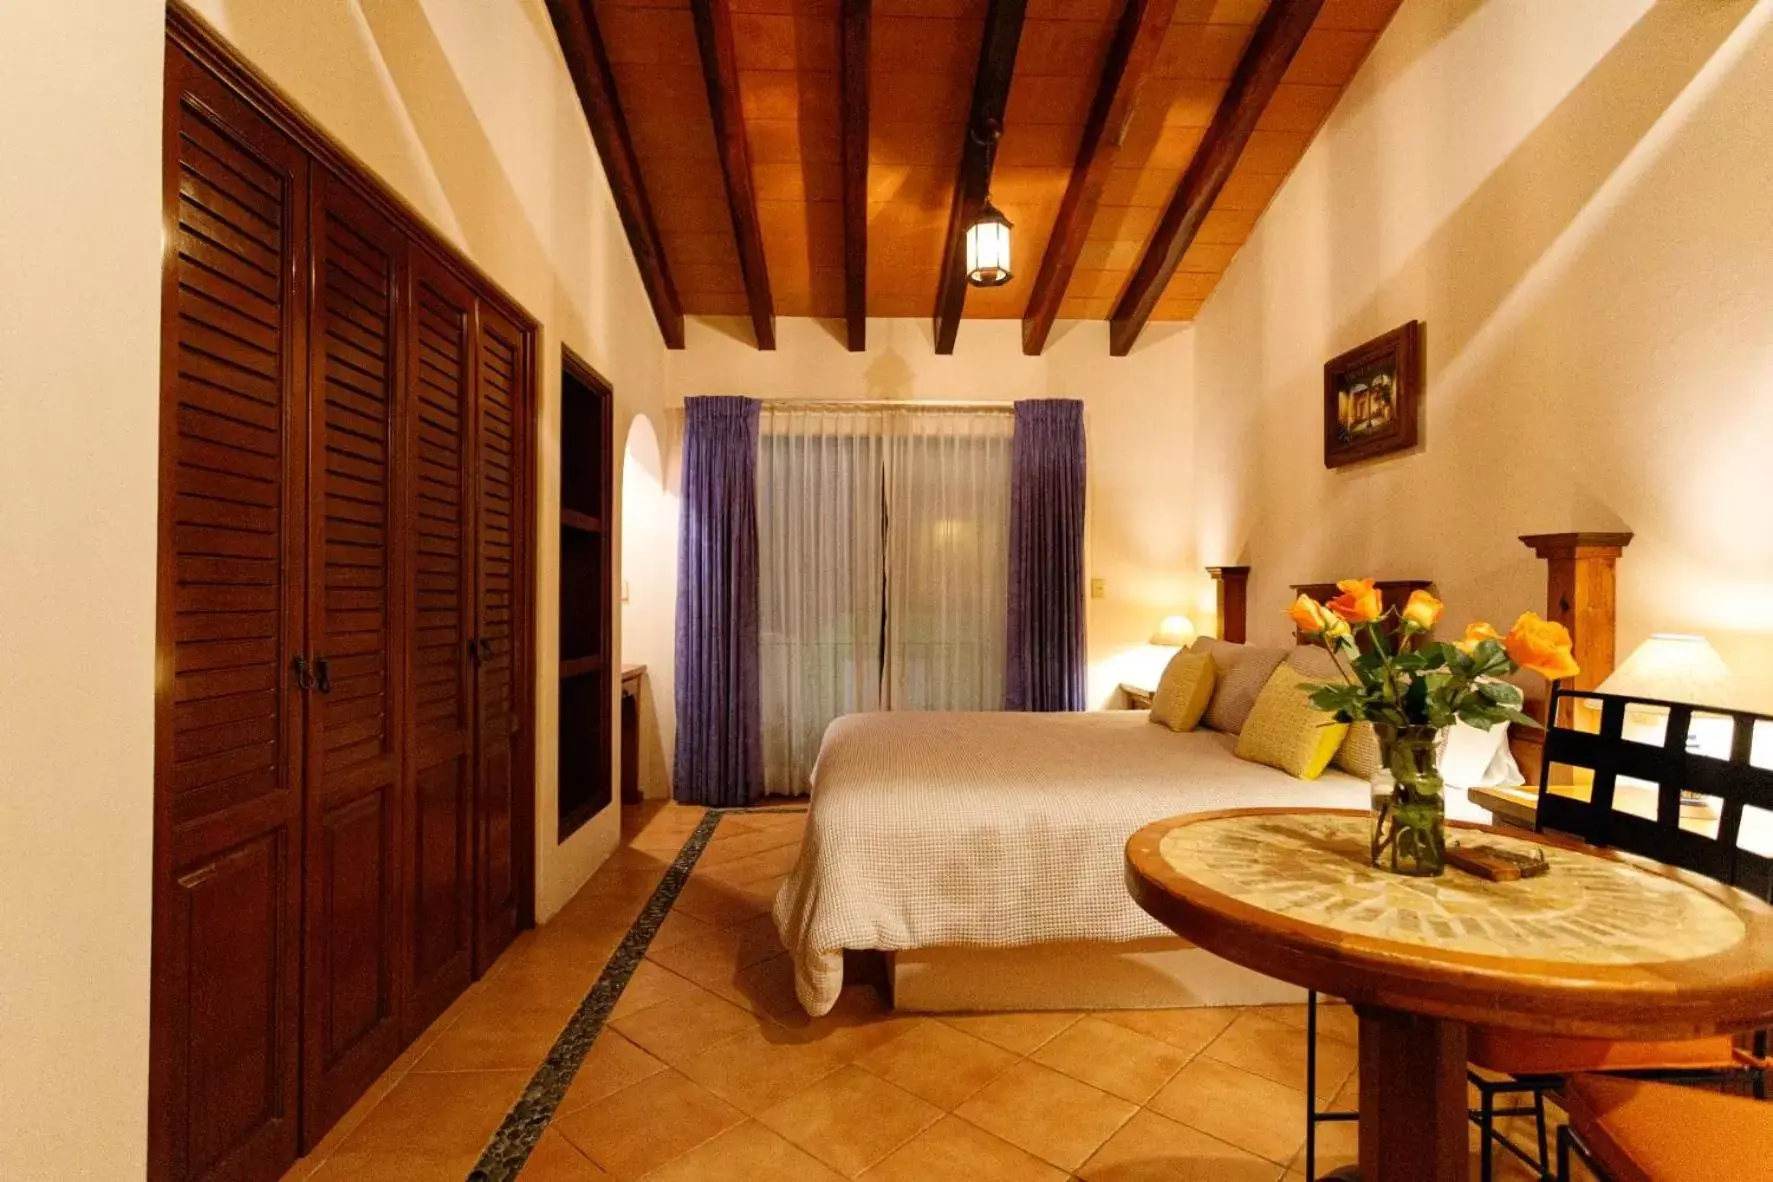 Bedroom in Hotel Lunata - 5th Avenue